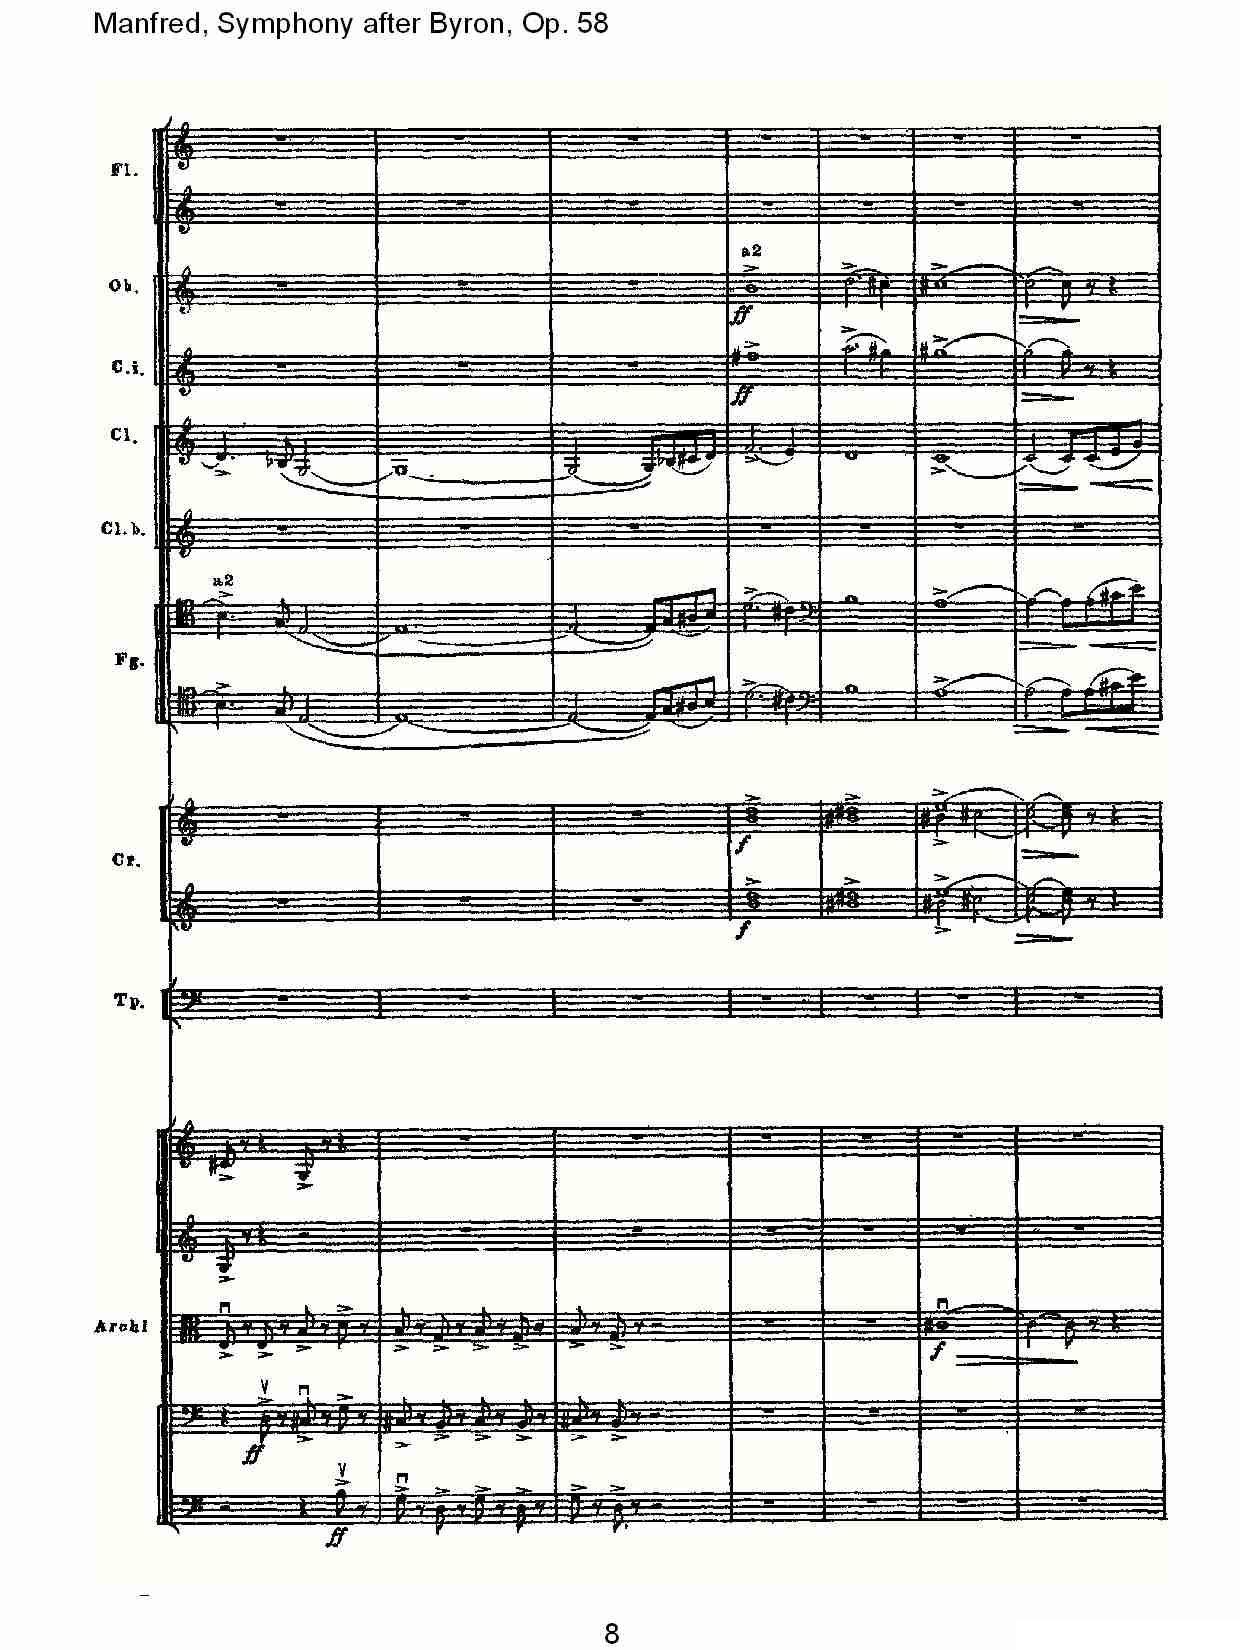 Manfred, Symphony after Byron, Op.58第一乐章（一）其它曲谱（图8）